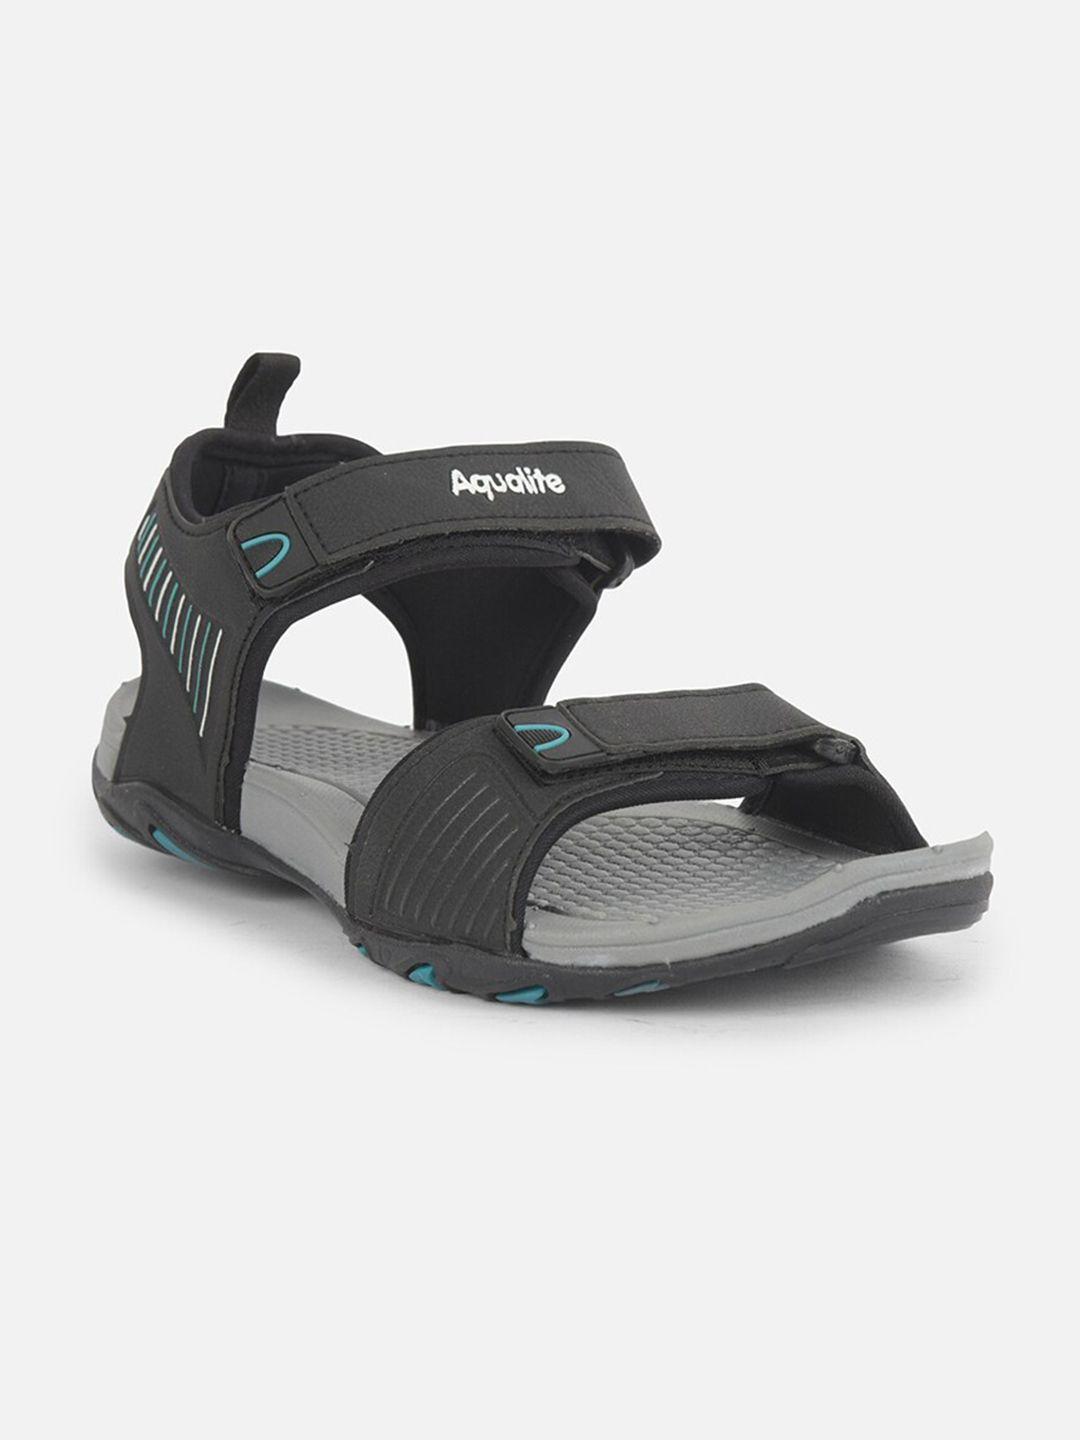 aqualite-men-black-&-grey-comfort-sandals